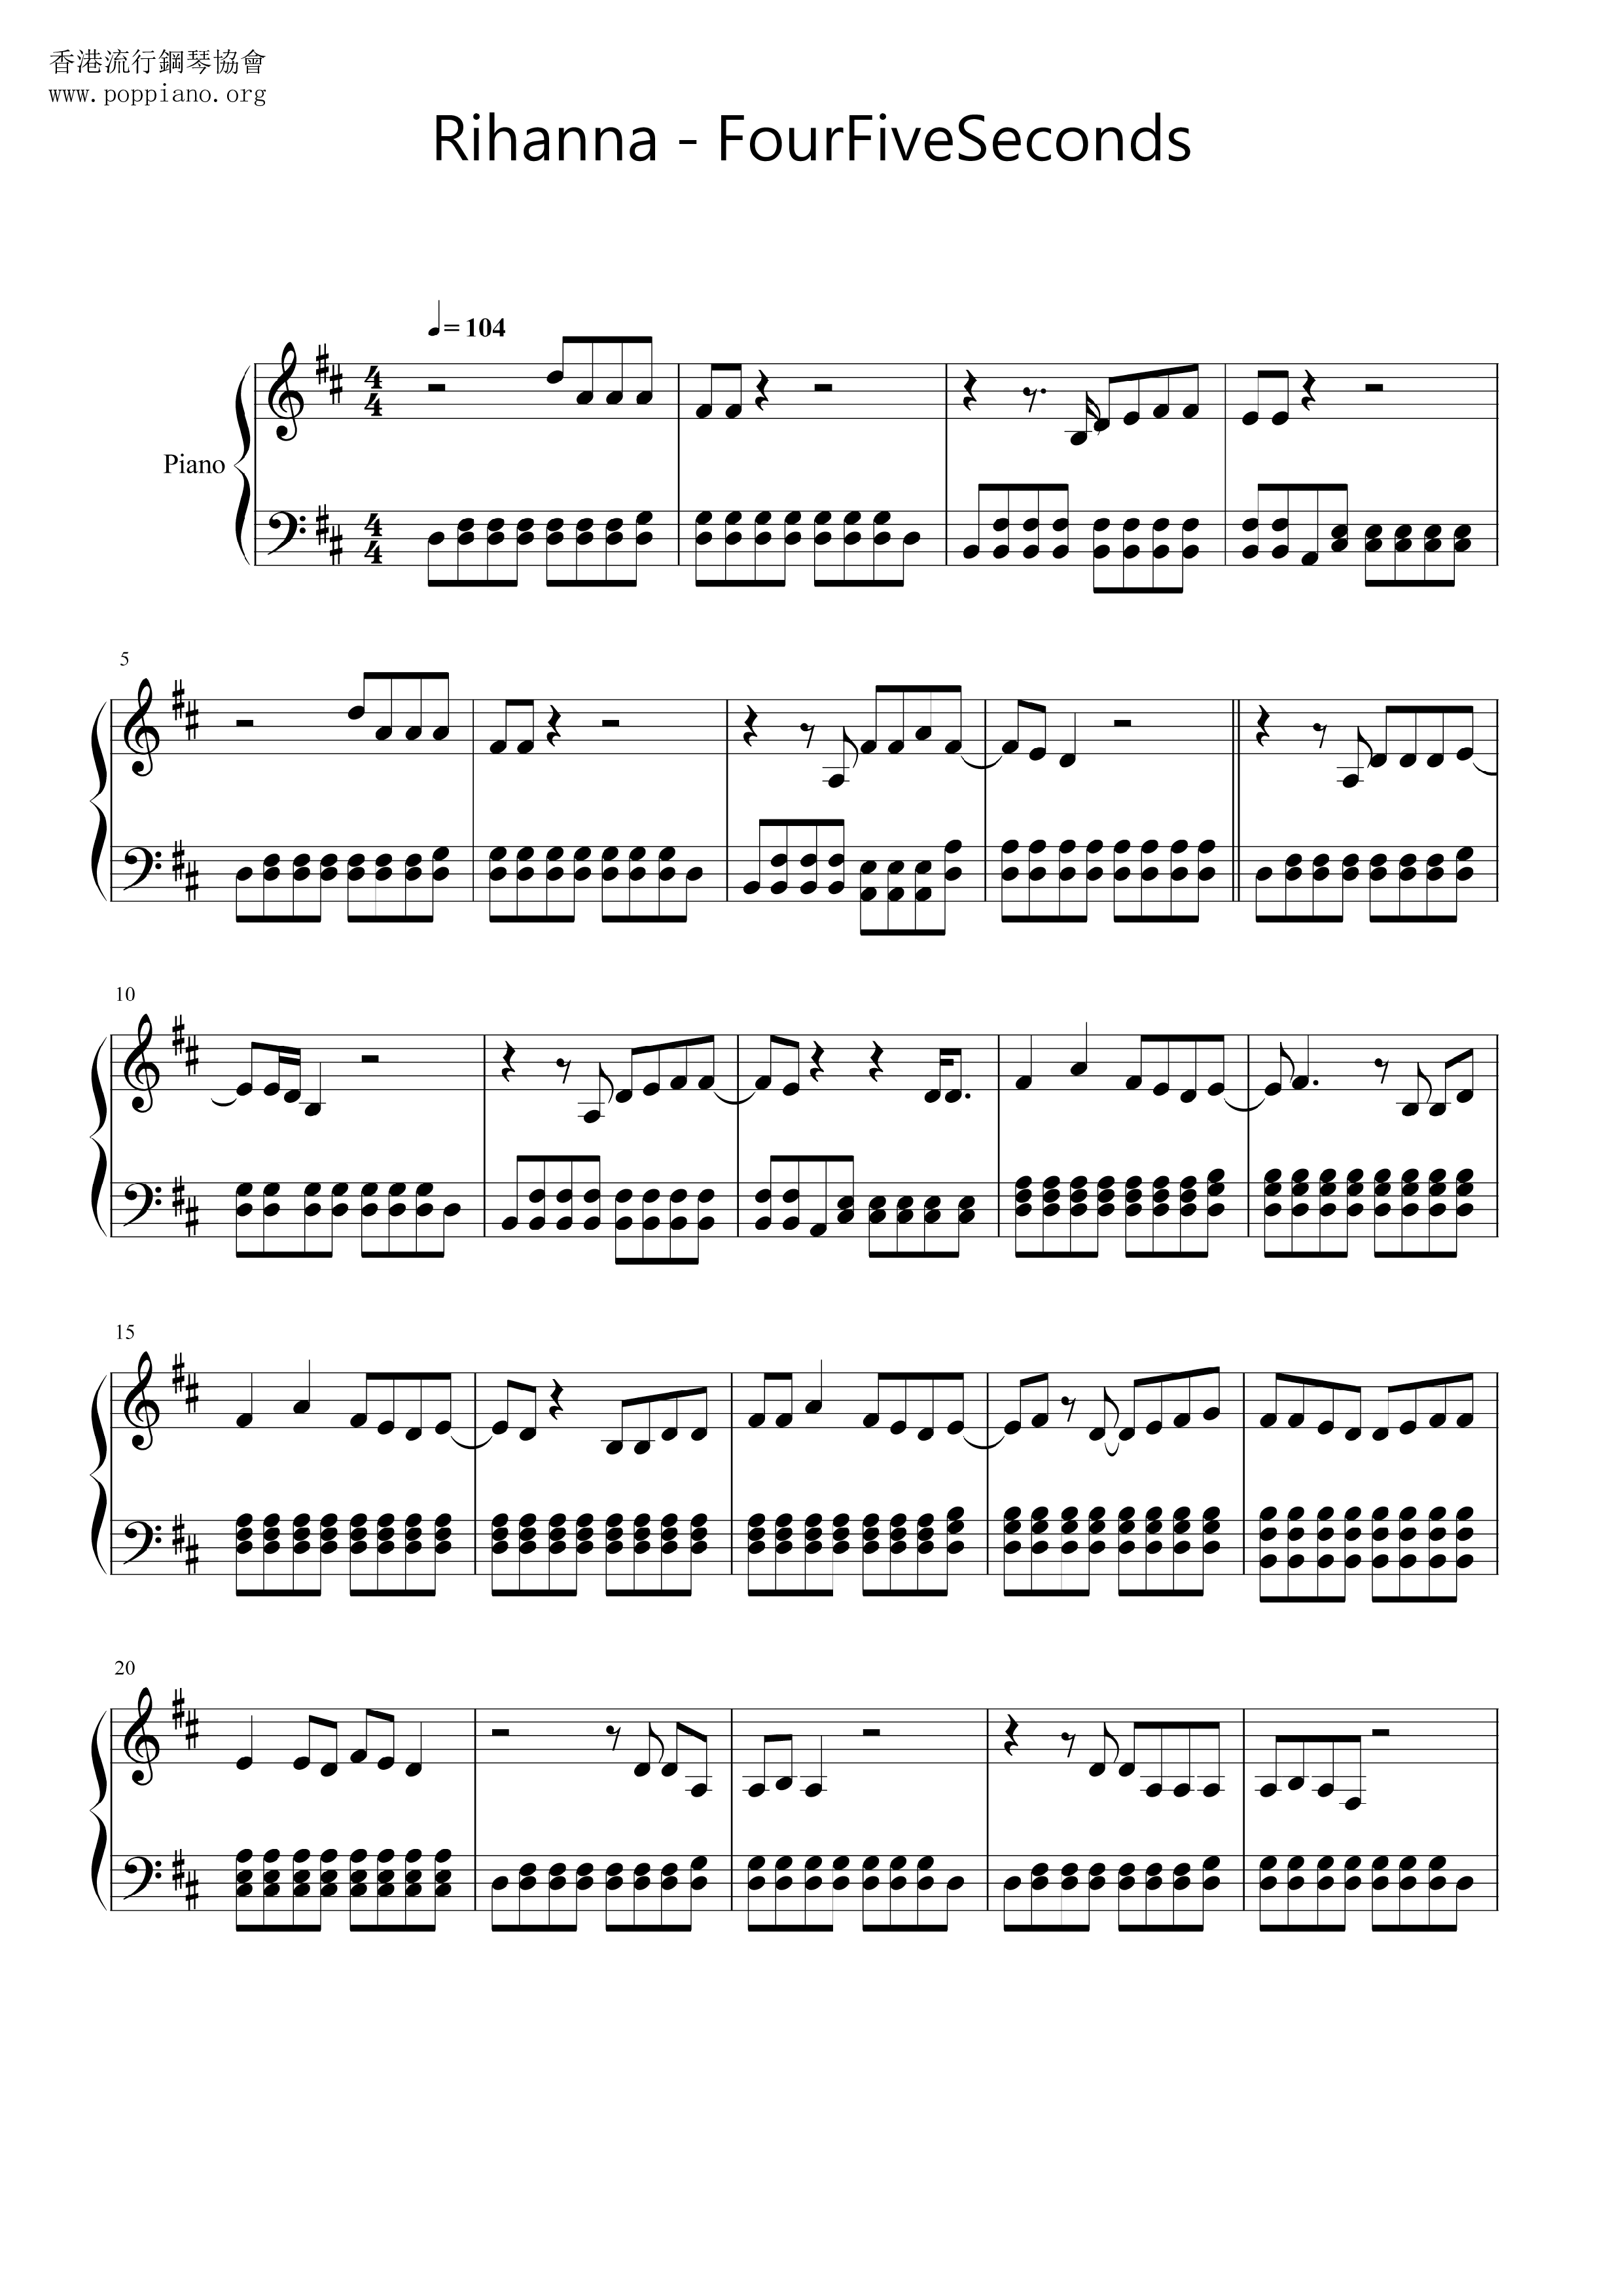 FourFiveSecondsピアノ譜